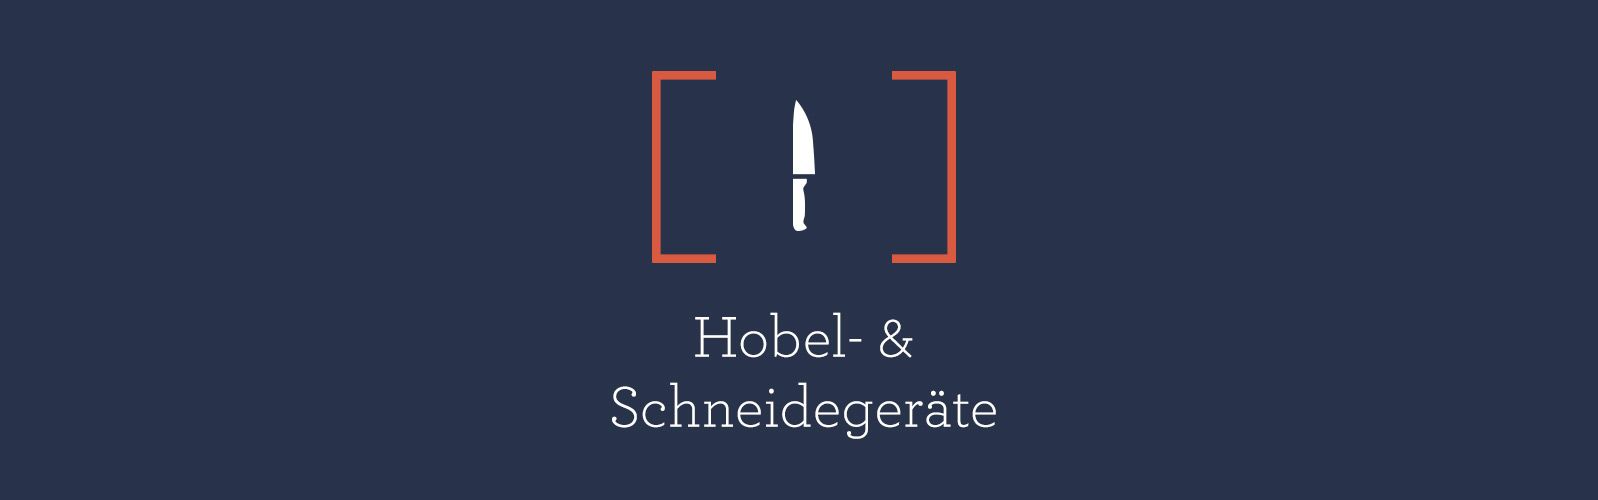 Hobel- & Schneidgeräte 